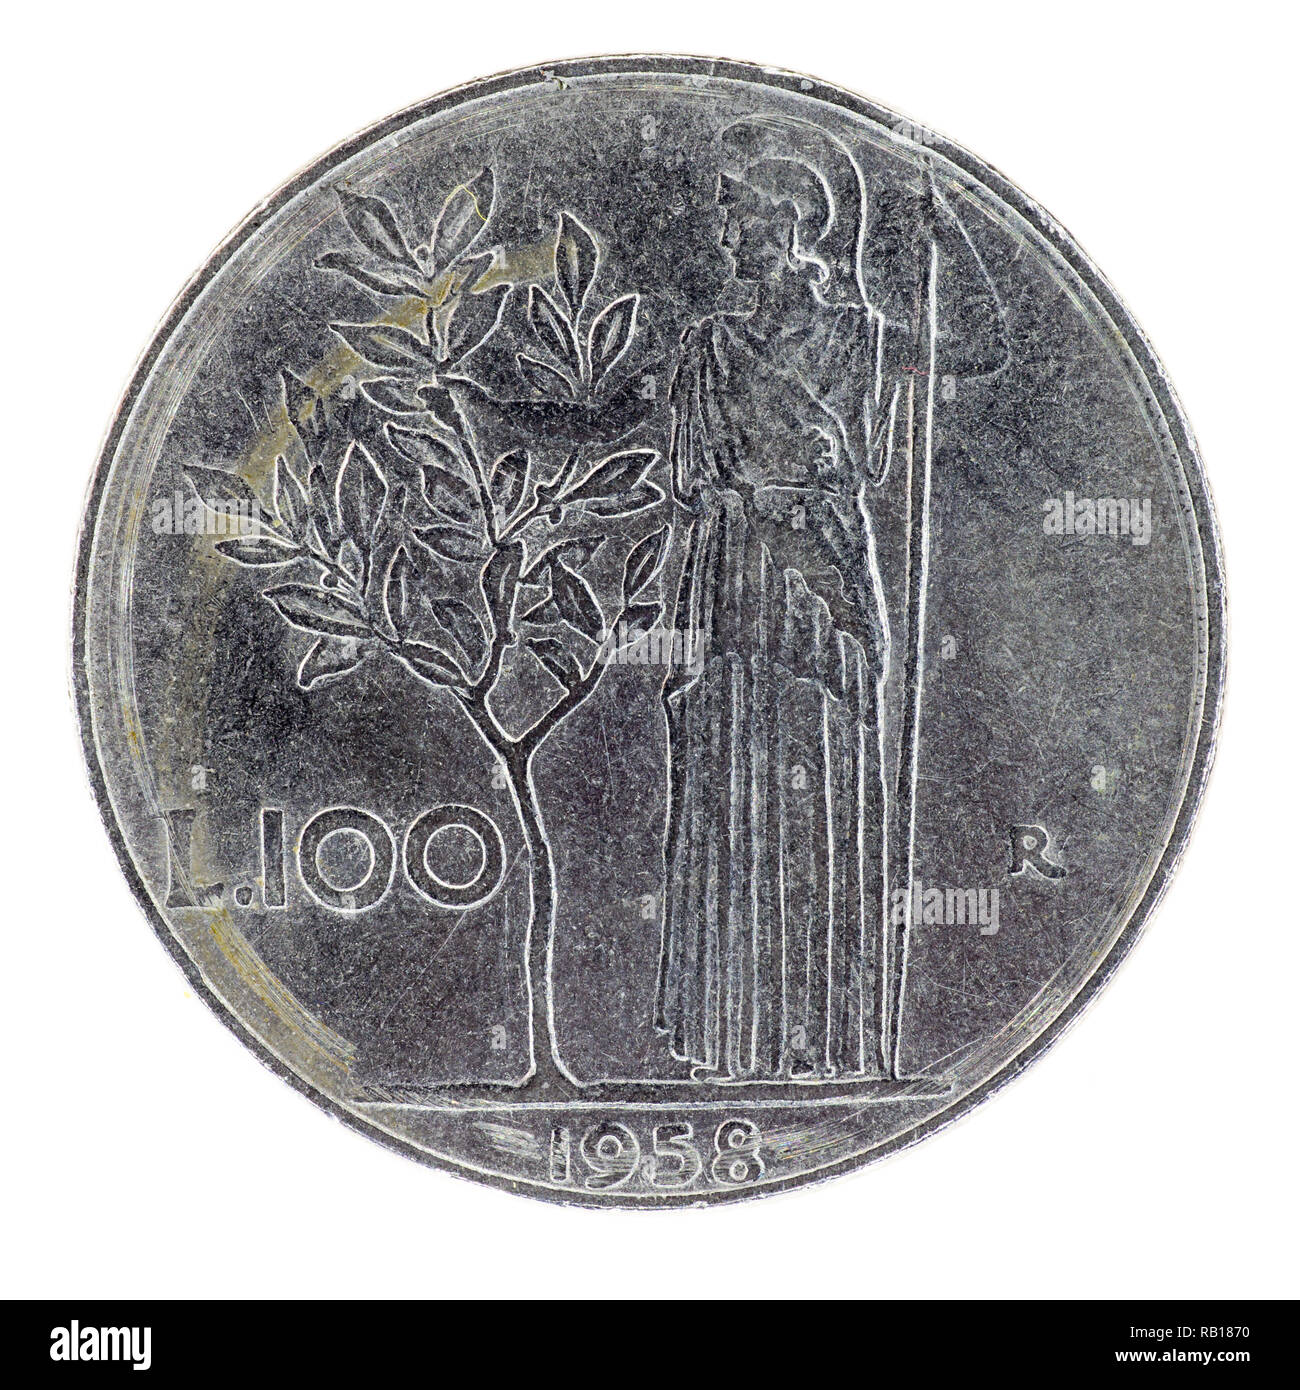 Italienische vor-Euro 100 Lira Münze datiert 1958 Stockfoto